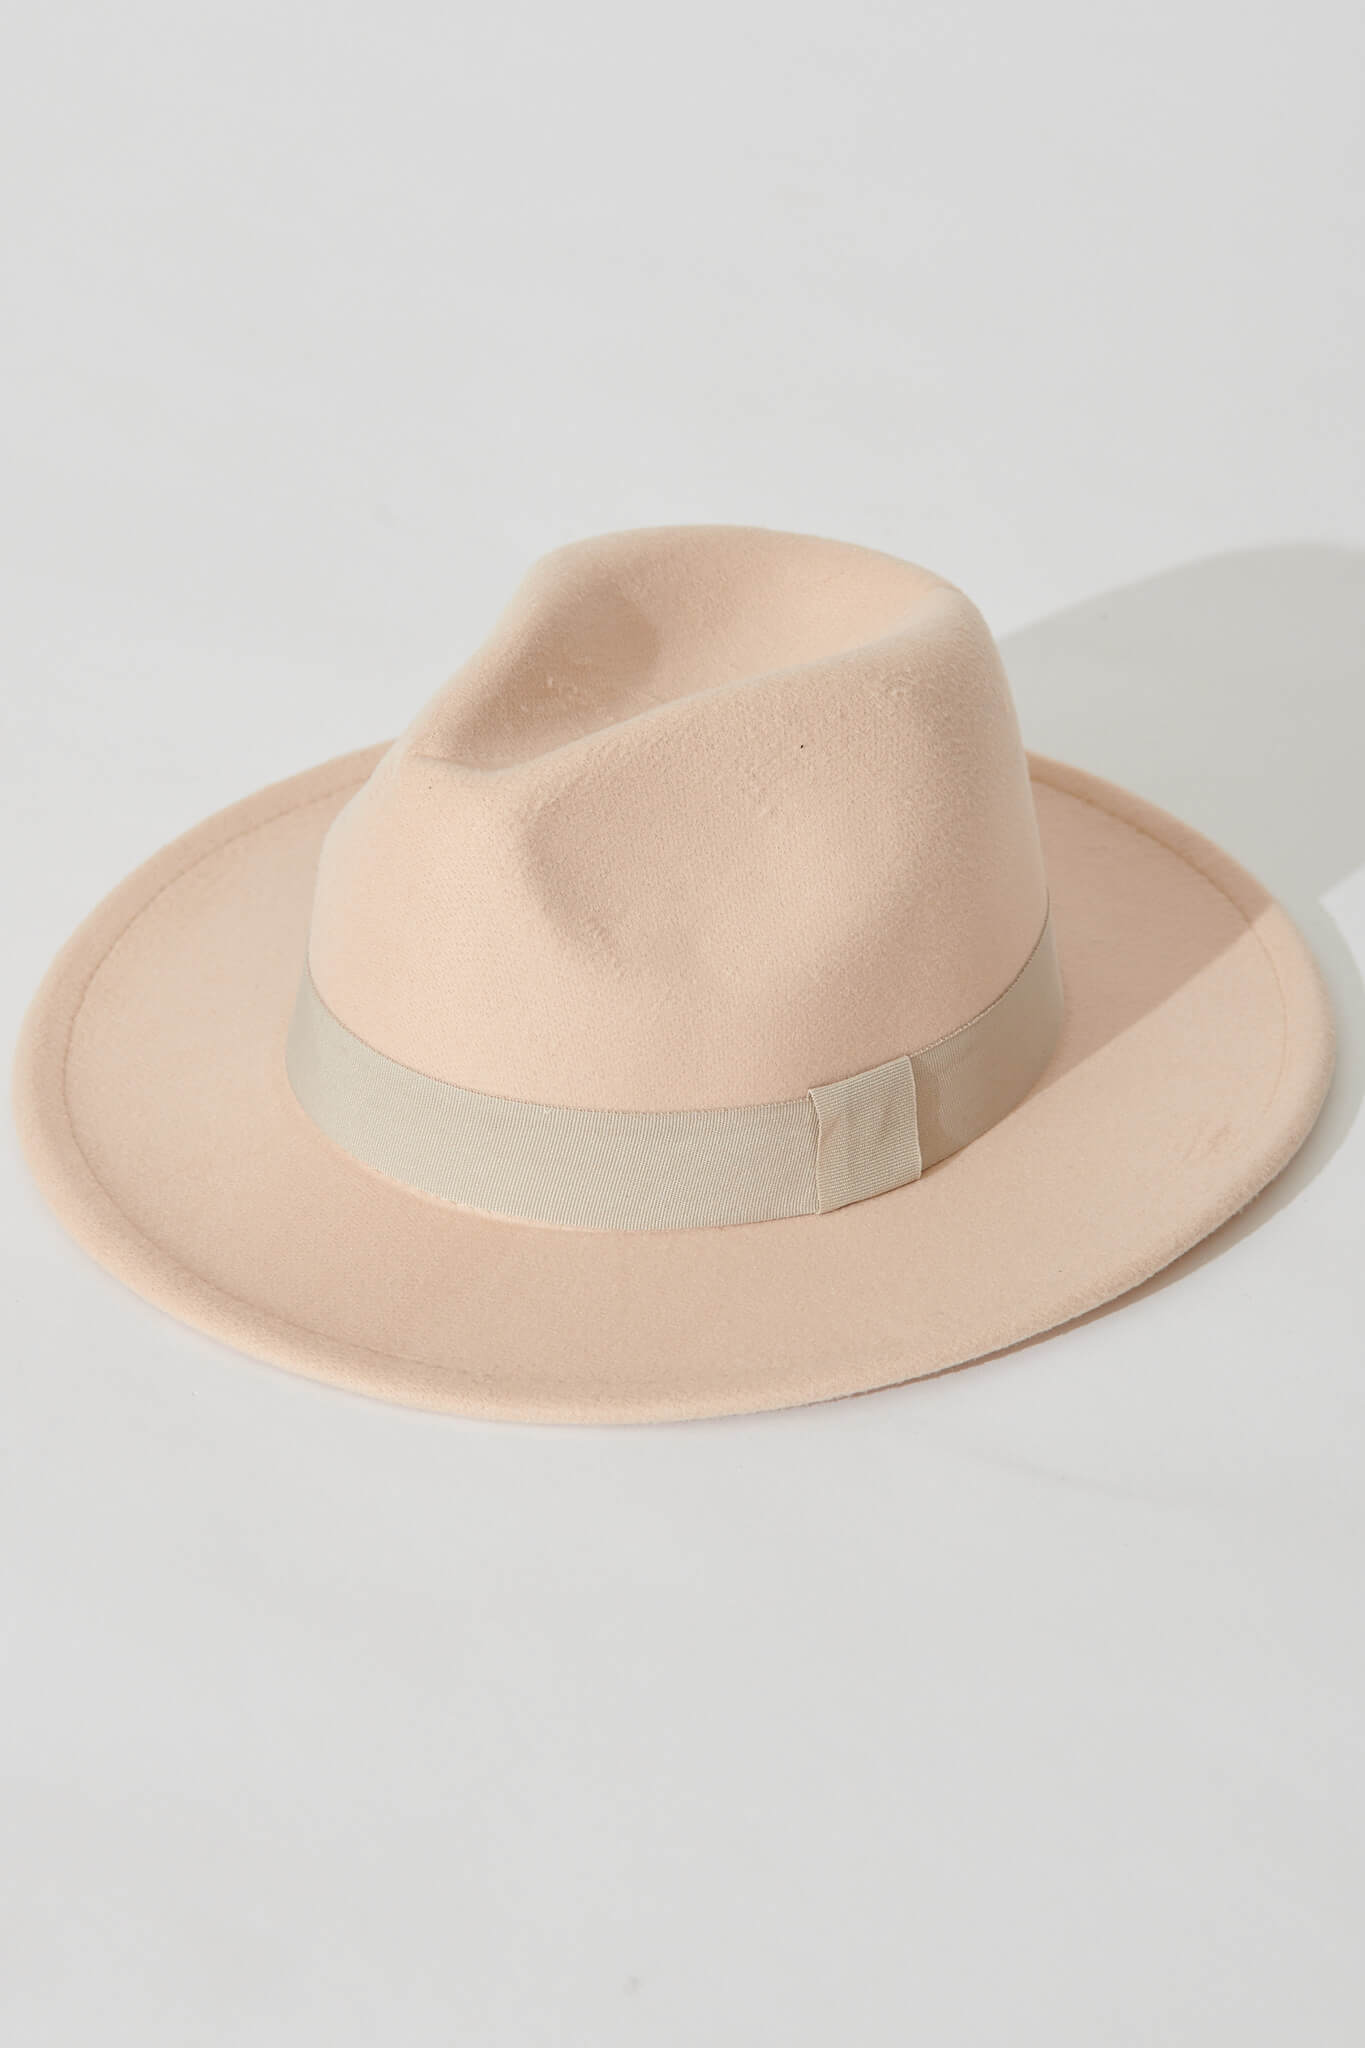 August + Delilah Nari Fedora Hat In Cream - flatlay